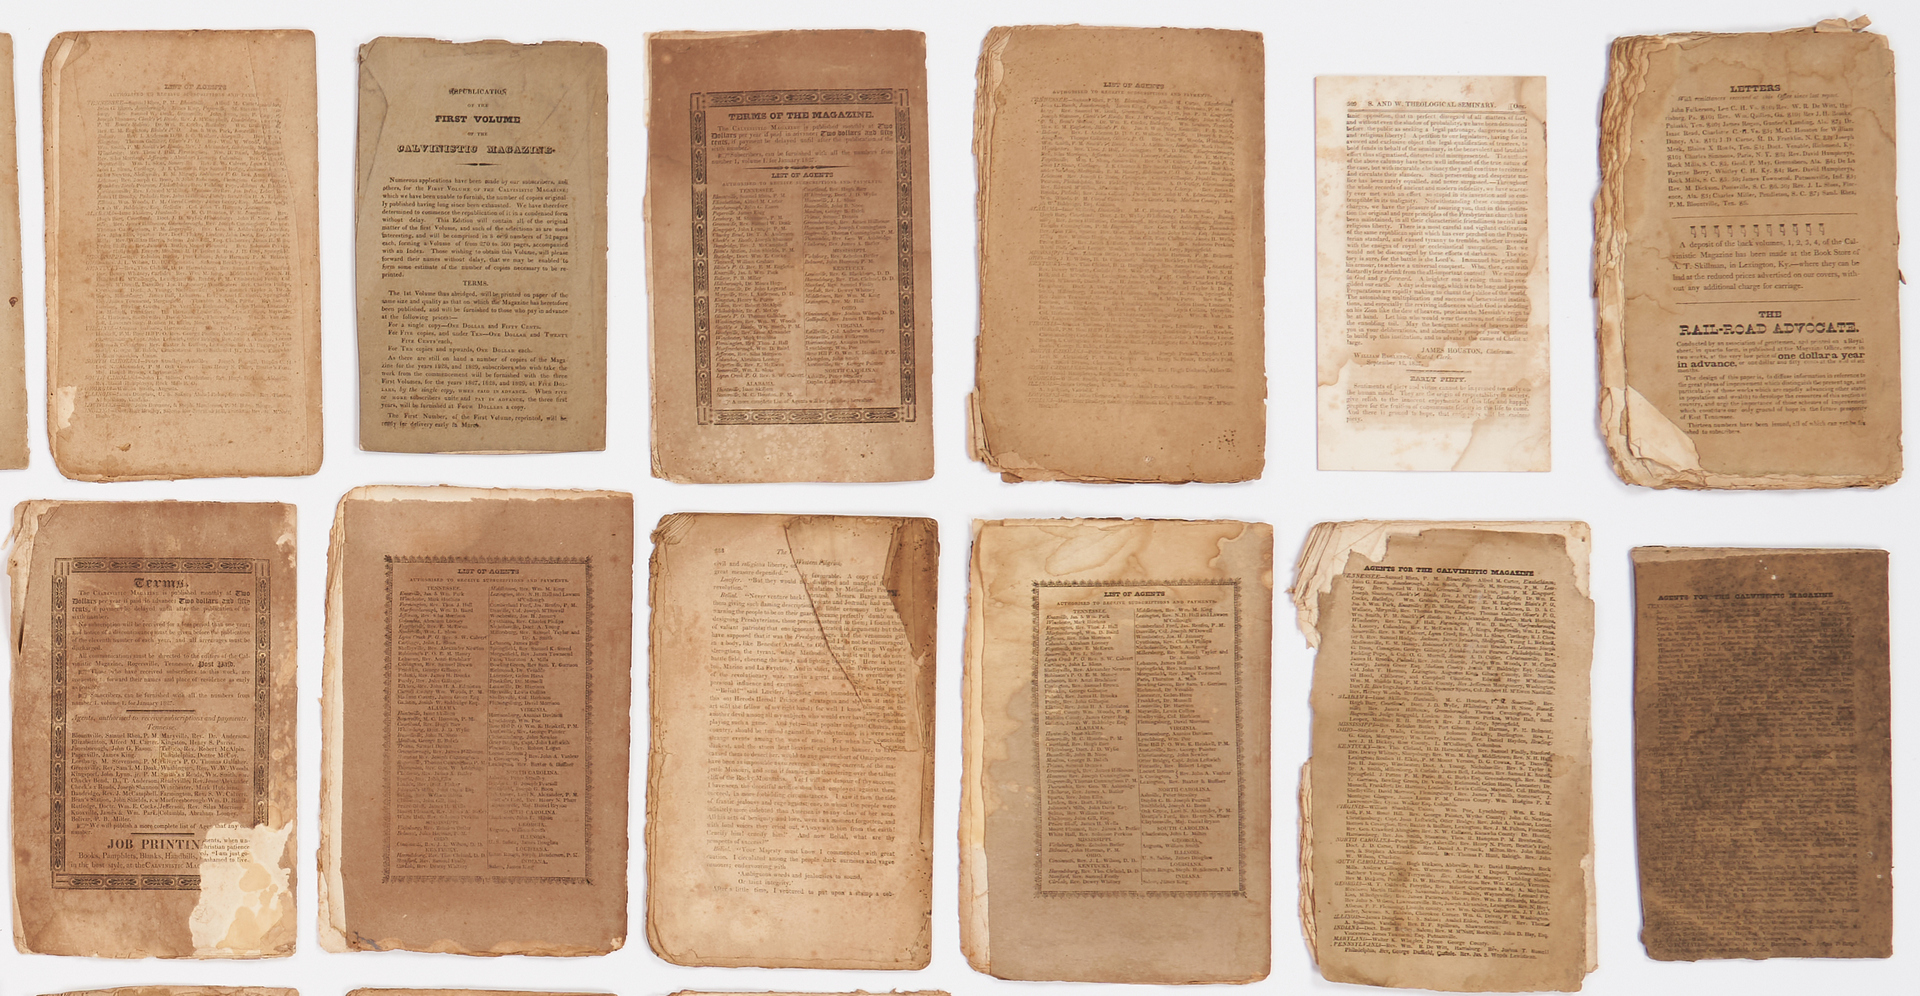 Lot 1030: 42 Calvinistic Magazines, Rogersville, TN, circa 1827-31